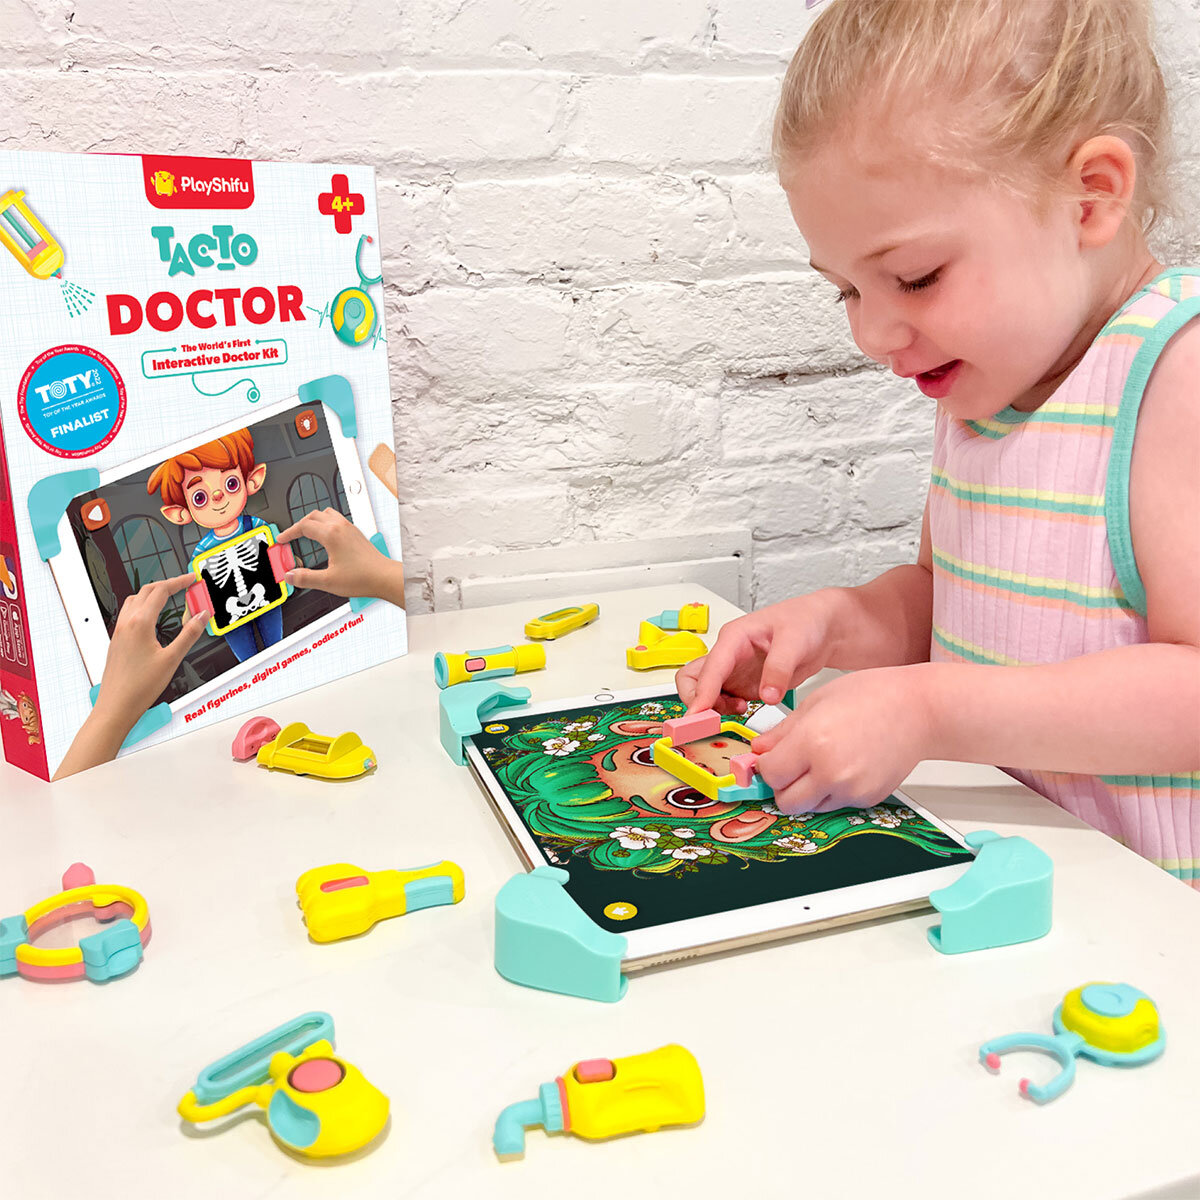 Buy Playshifu Tacto Doctor Lifestyle Image at Costco.co.uk